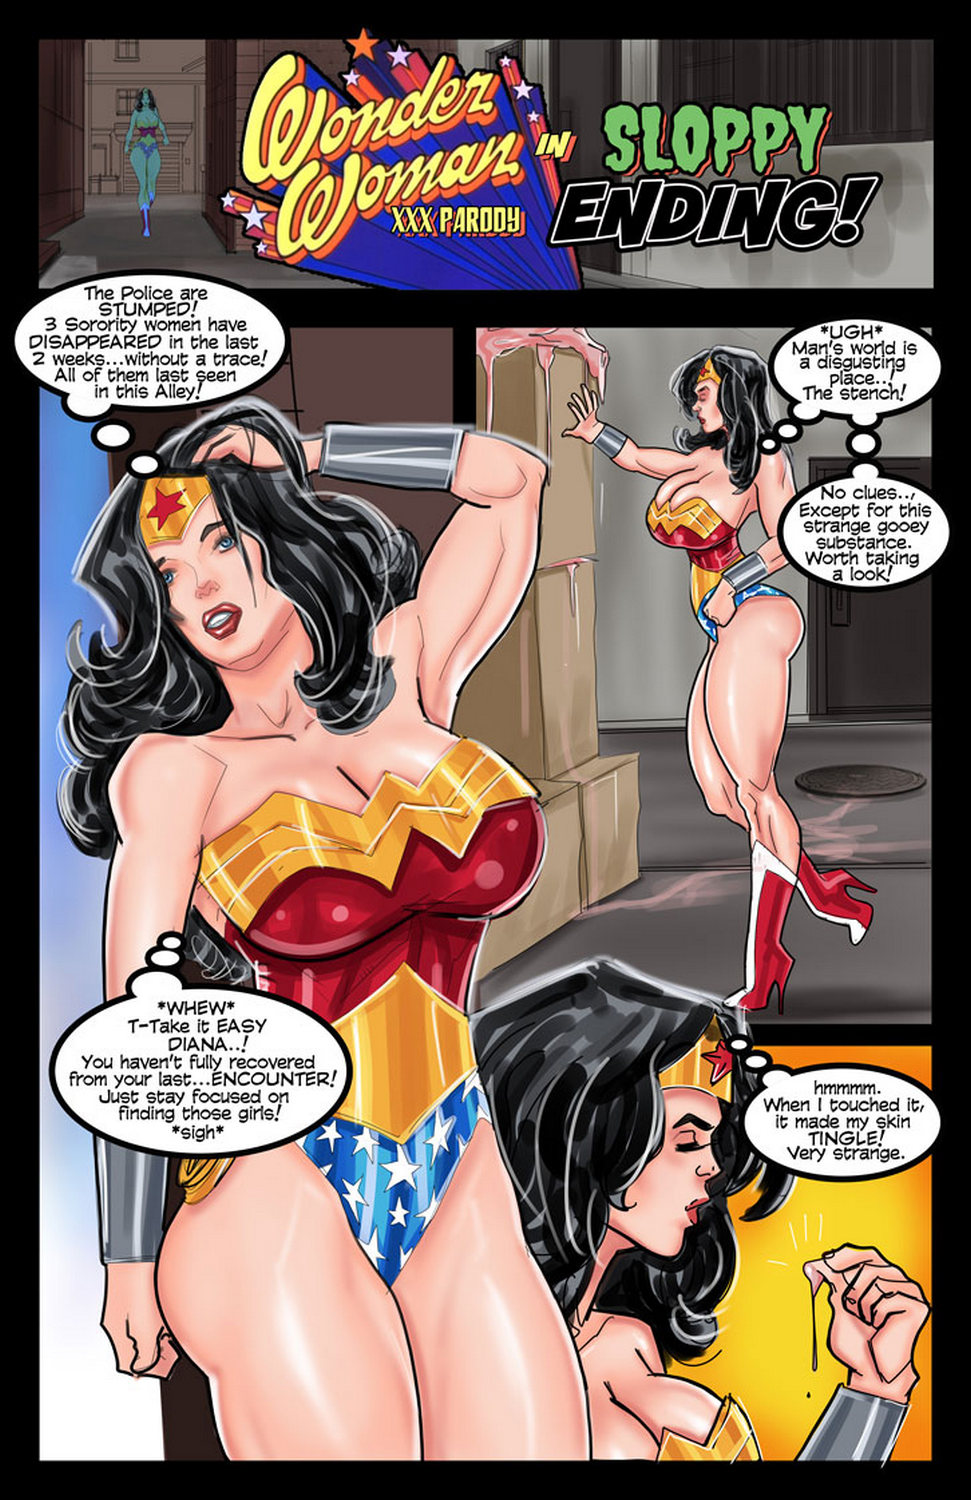 Cover Wonder Woman In Sloppy Ending